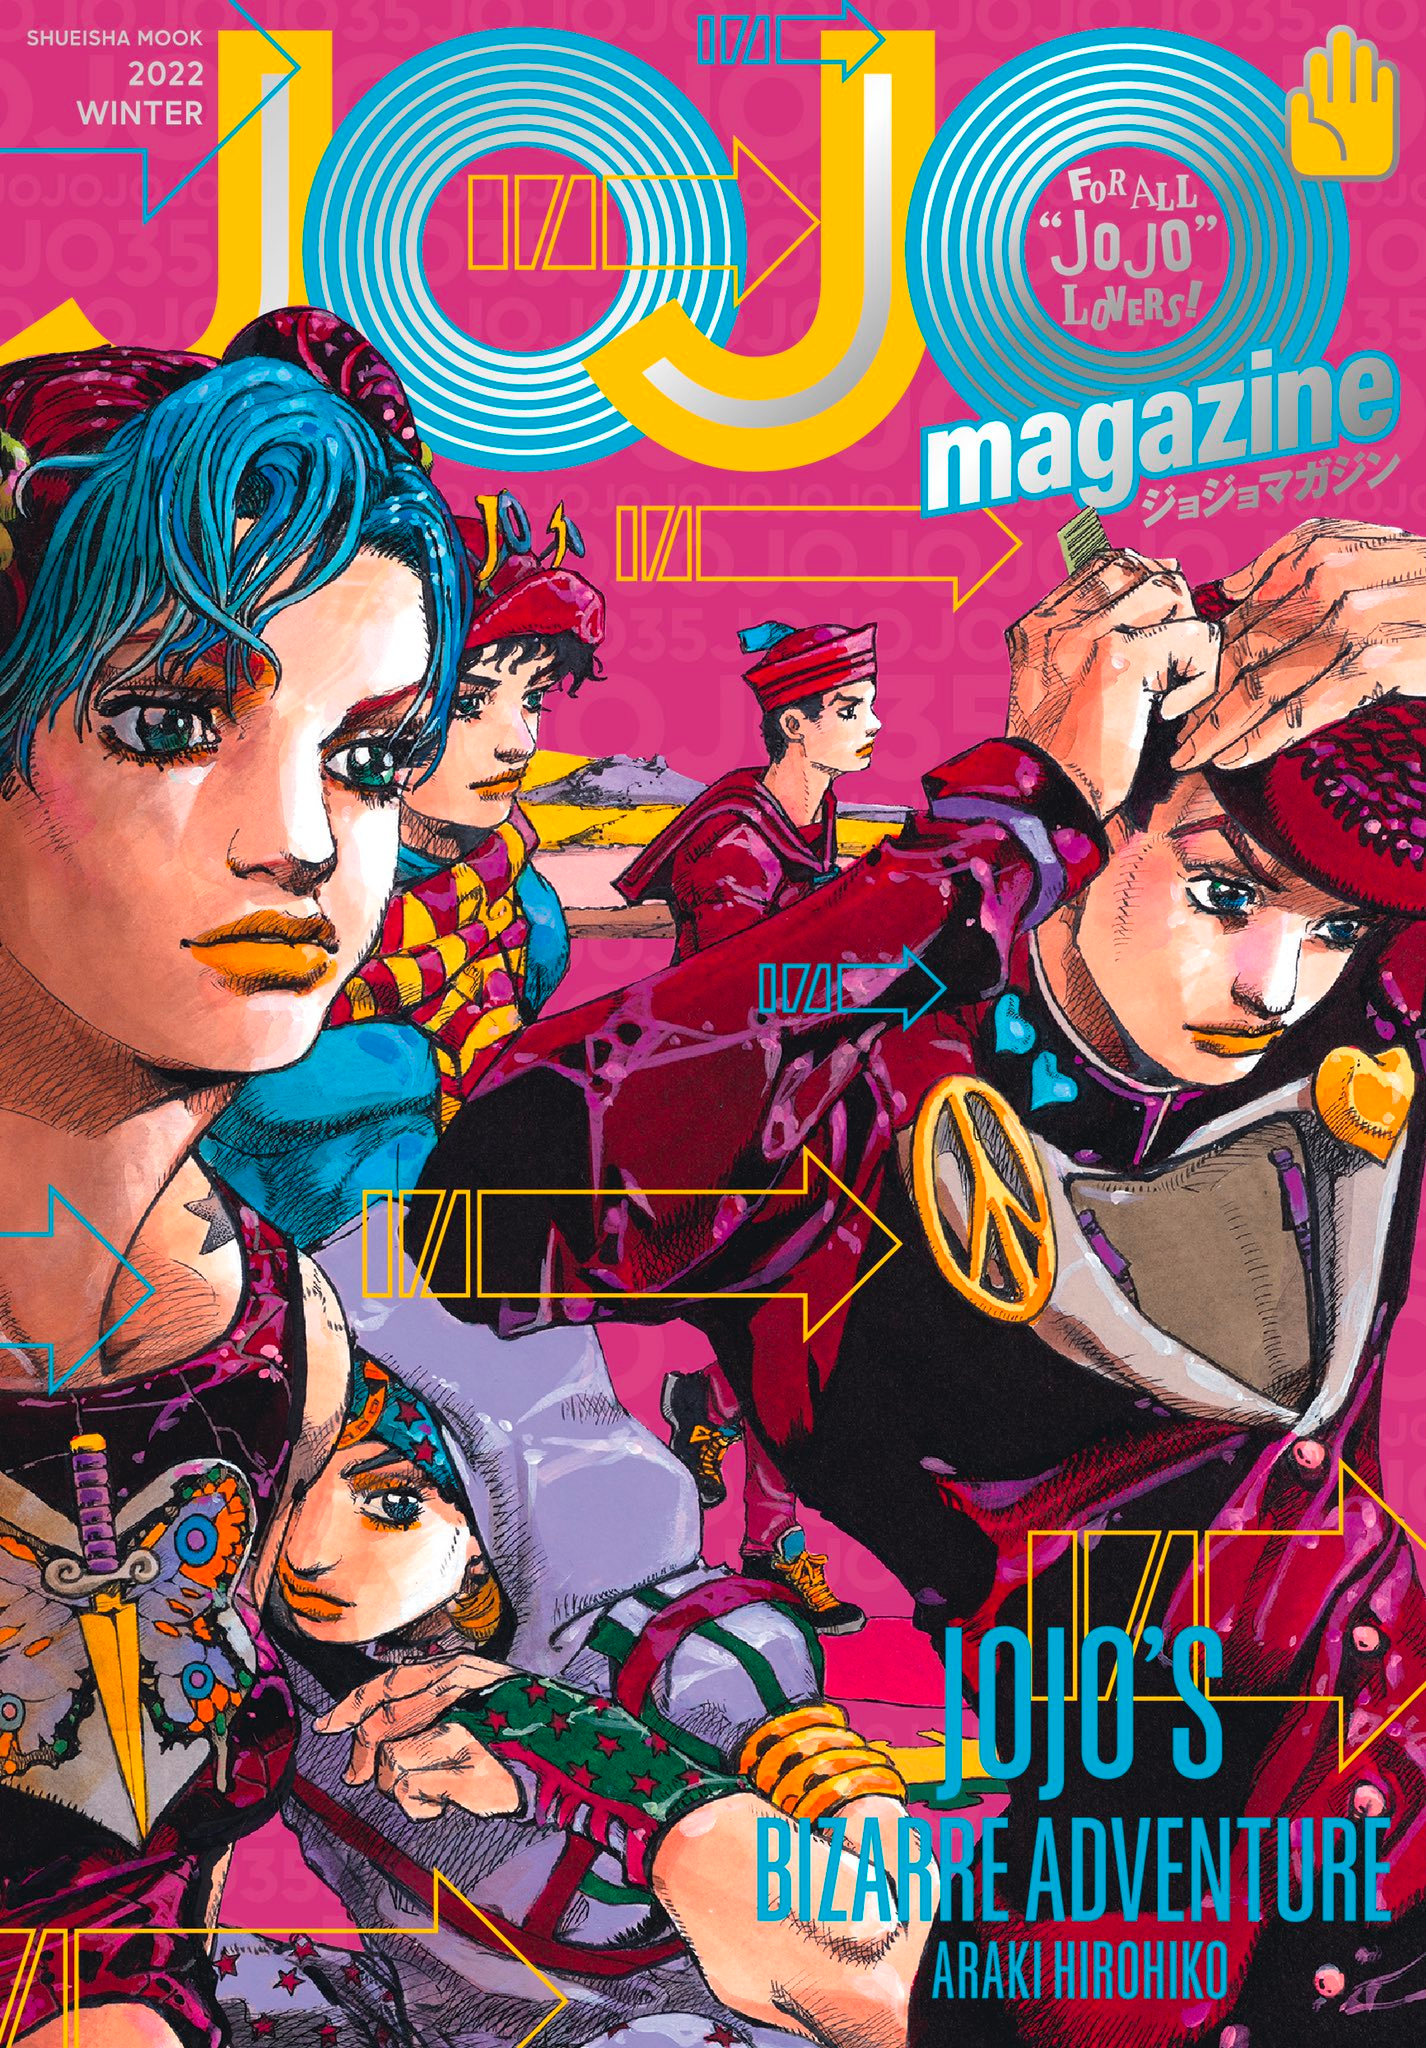 JOJO magazine 2022 WINTER's Cover Art by Hirohiko Araki Revealed